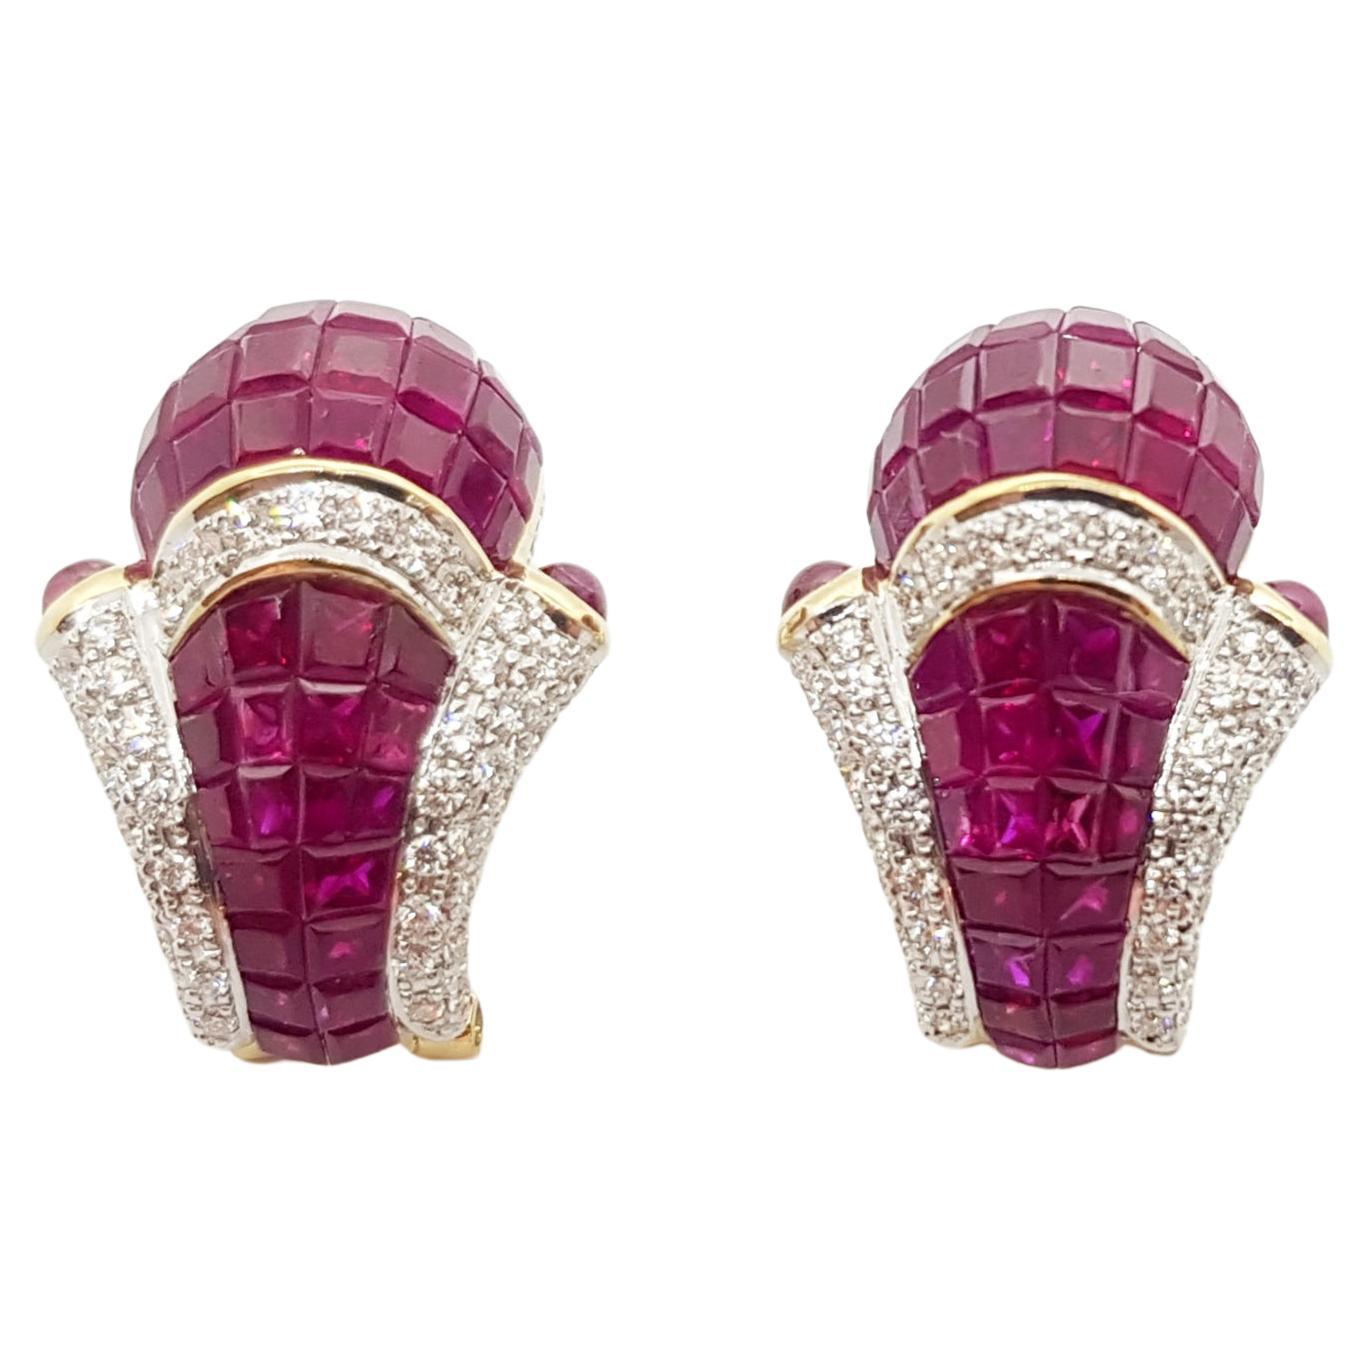 Ruby, Cabochon Ruby and Diamond Earrings Set in 18 Karat Gold Settings